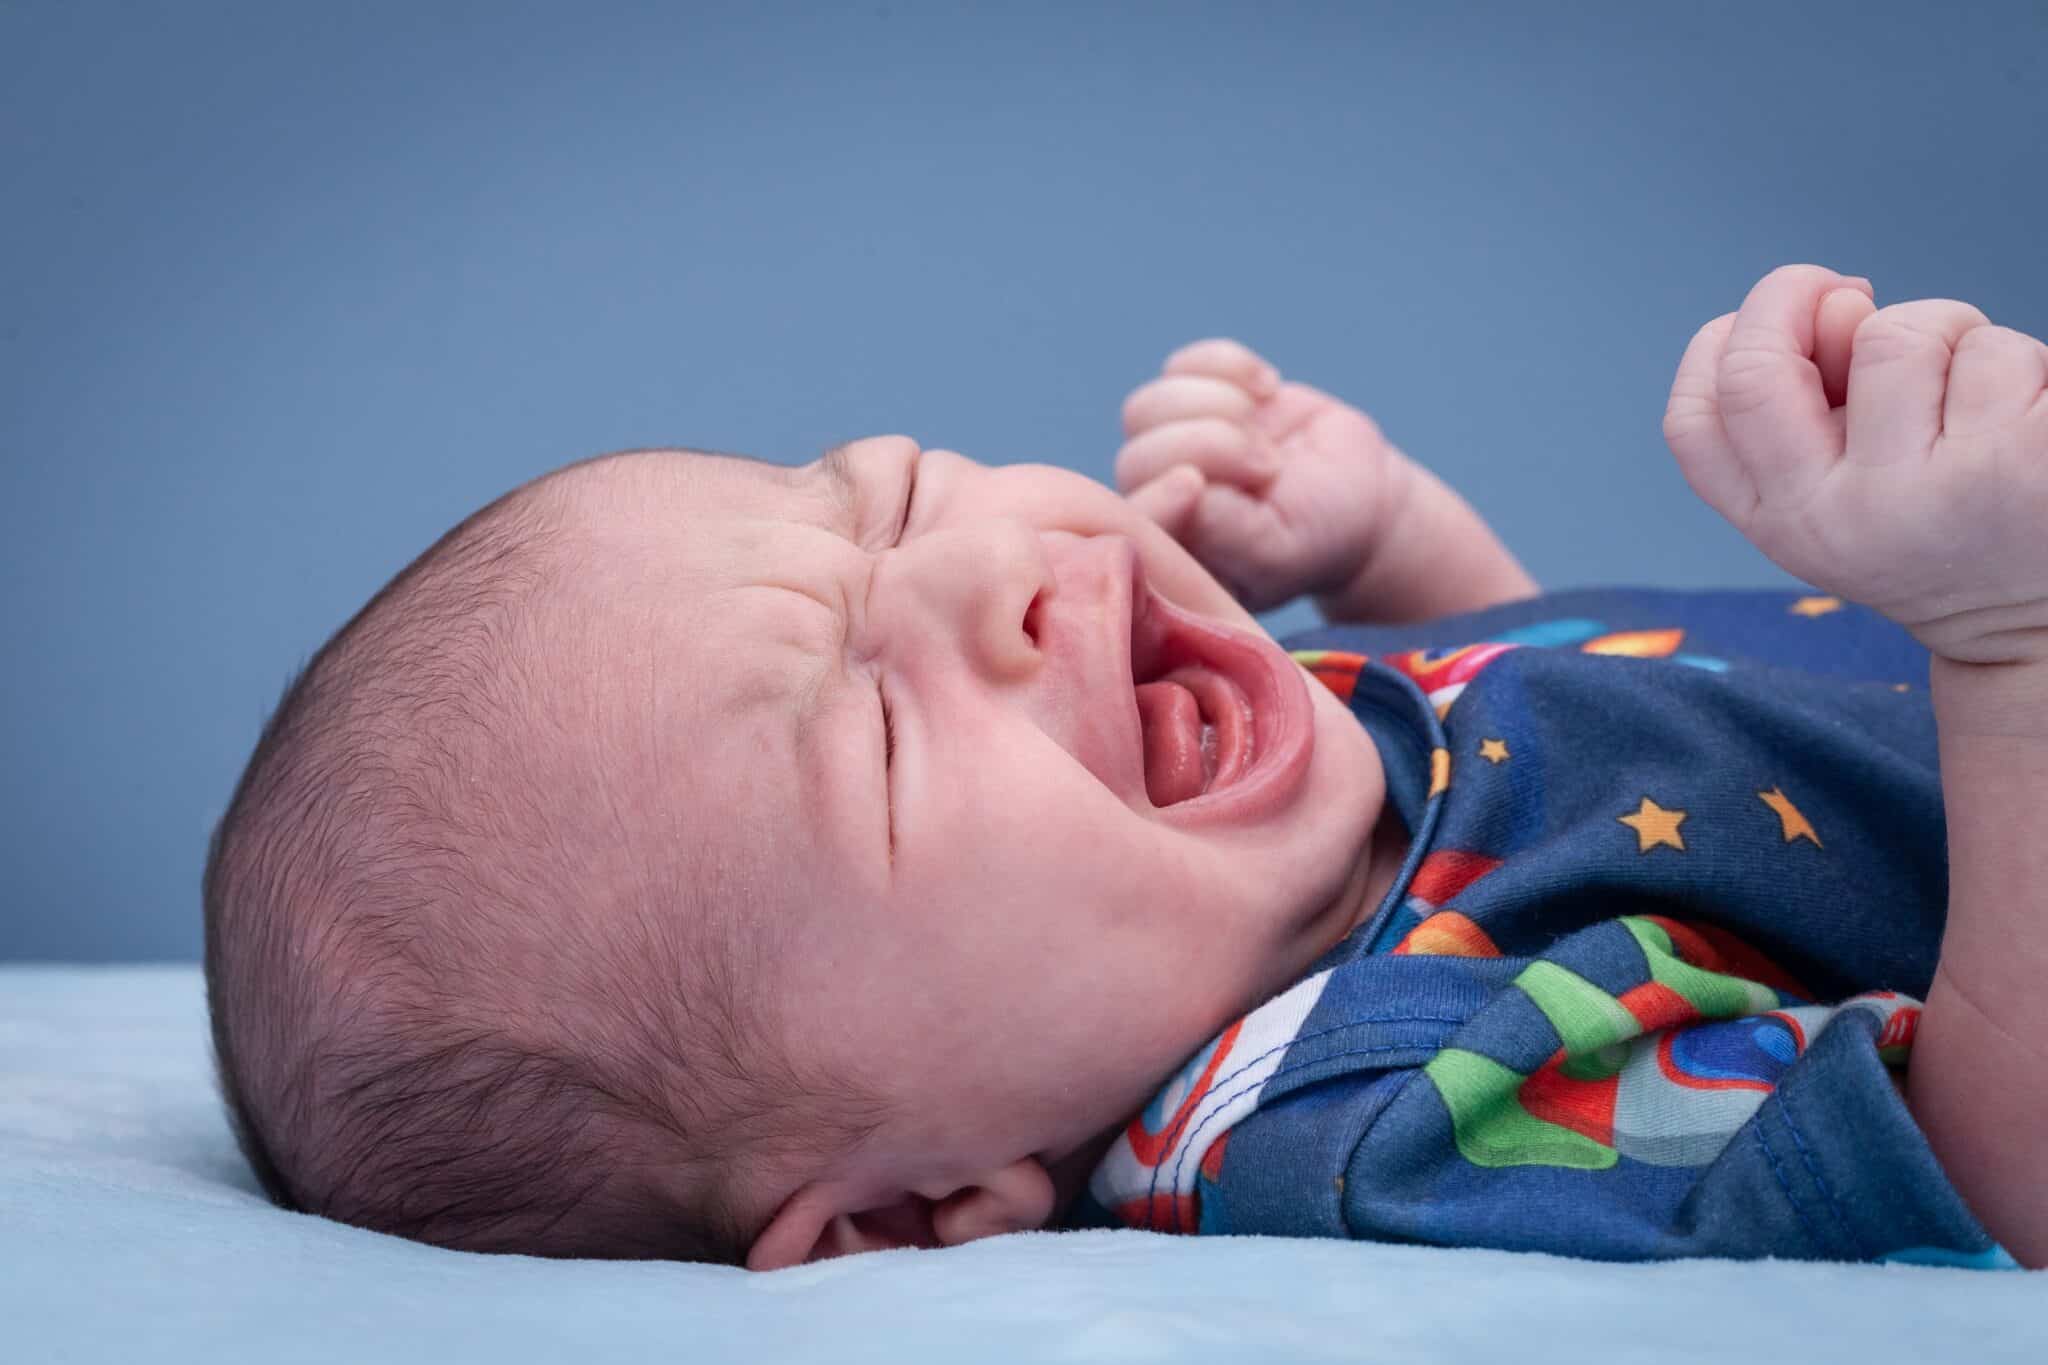 Infant Circumcision: Should Babies Be Circumcised?